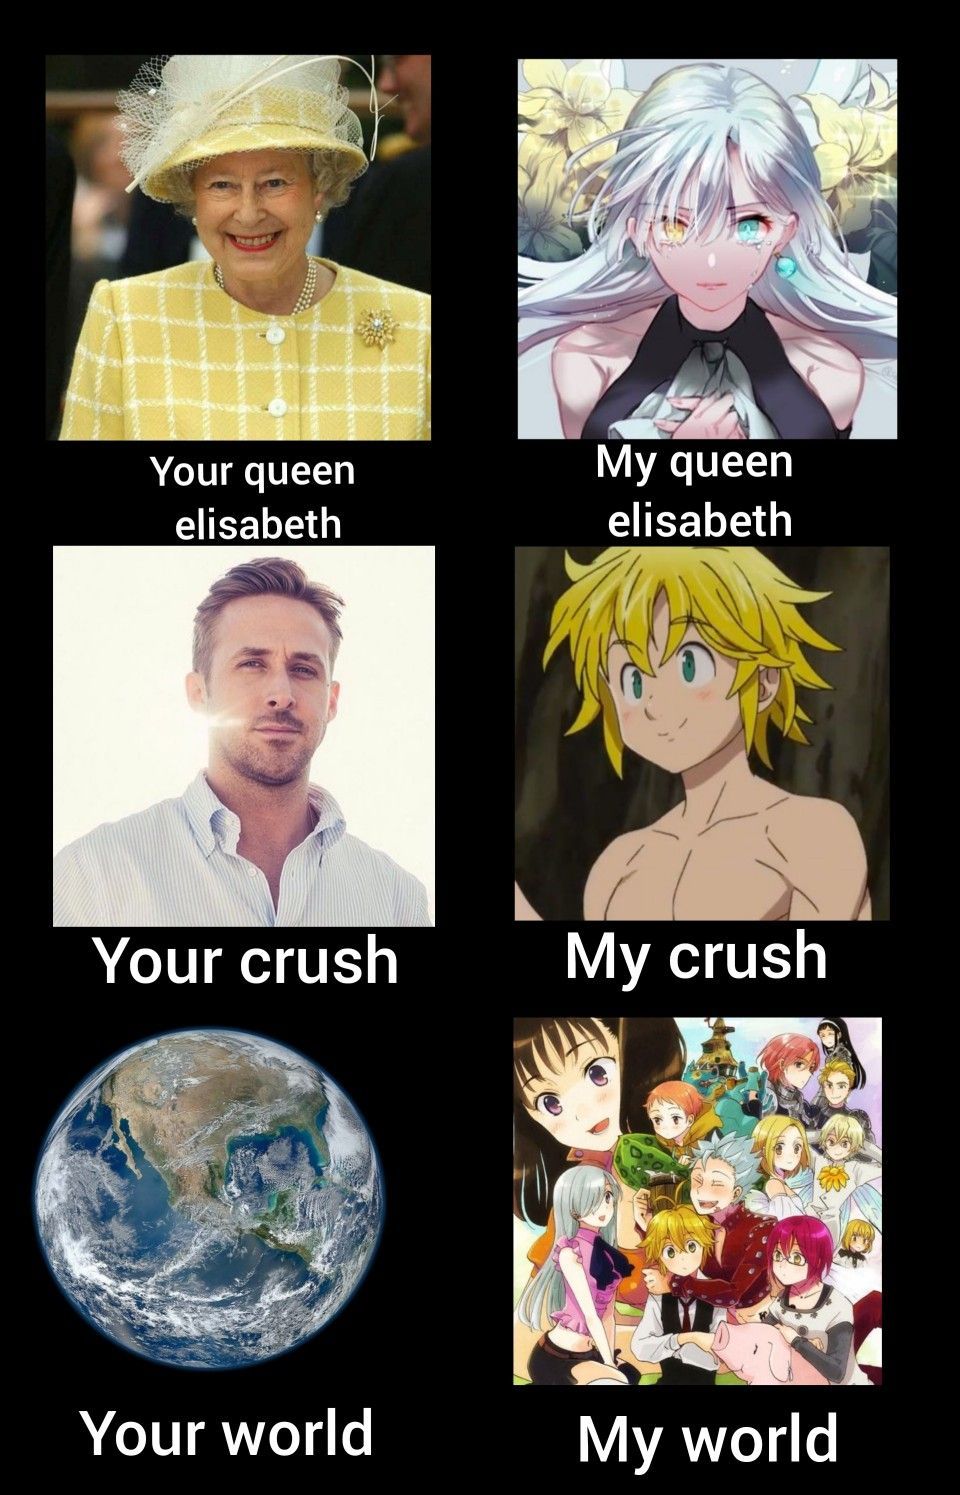 queen elizabeth vs elizabeth 7 deadly sins anime meme